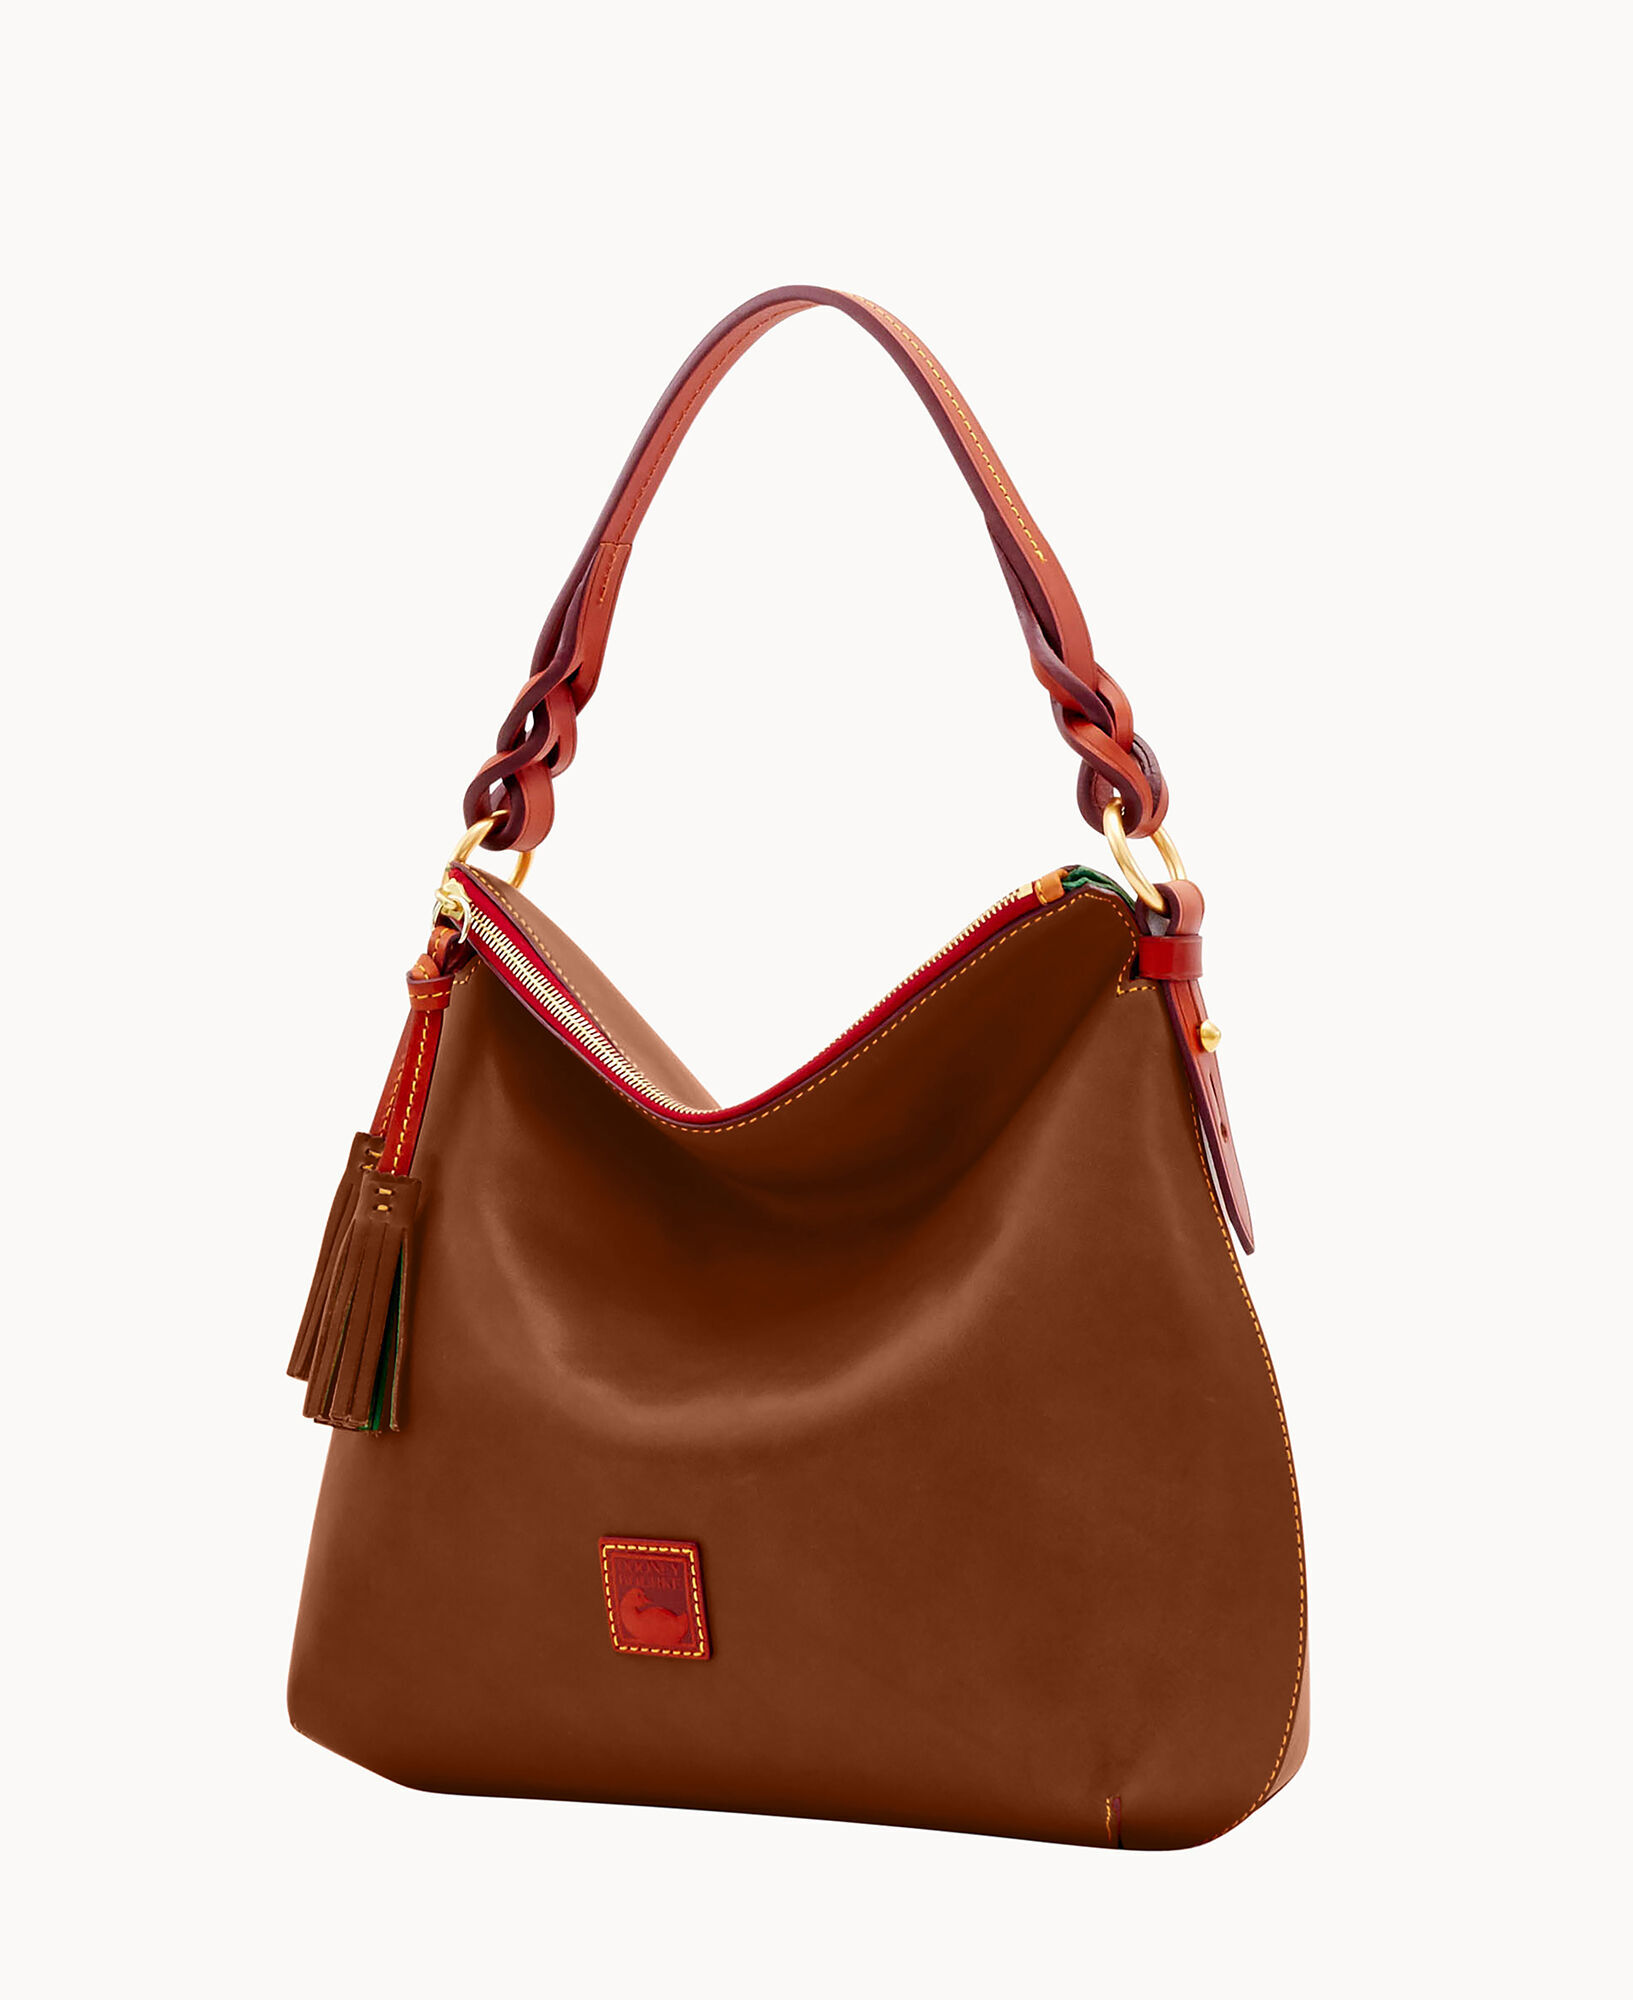 Buy Exquisite Handbag Shop Interior Design Retail Ladys Bag